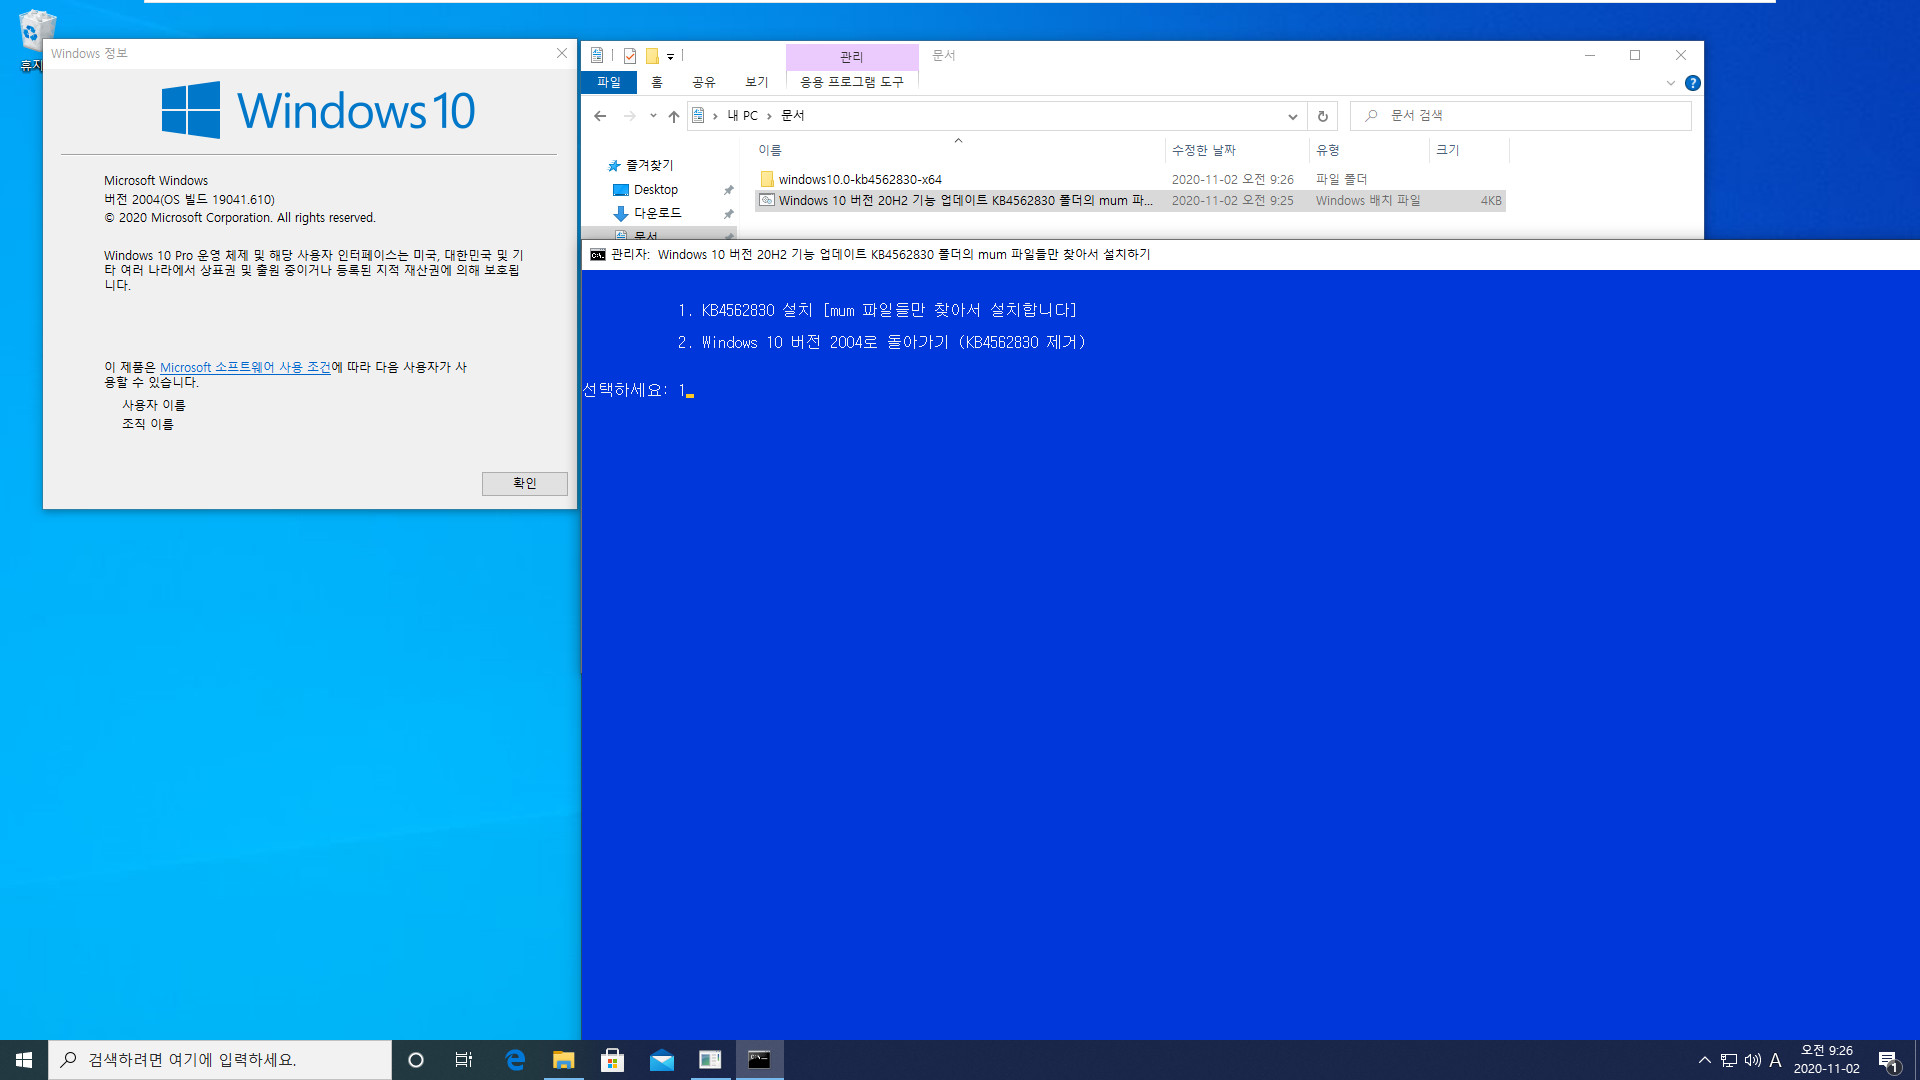 Windows 10 버전 20H2 기능 업데이트 KB4562830 폴더의 mum 파일들만 찾아서 설치하기.bat - 크로미엄 엣지 설치하지 않고 버전 20H2만 설치하기 테스트 2020-11-02_092654.jpg